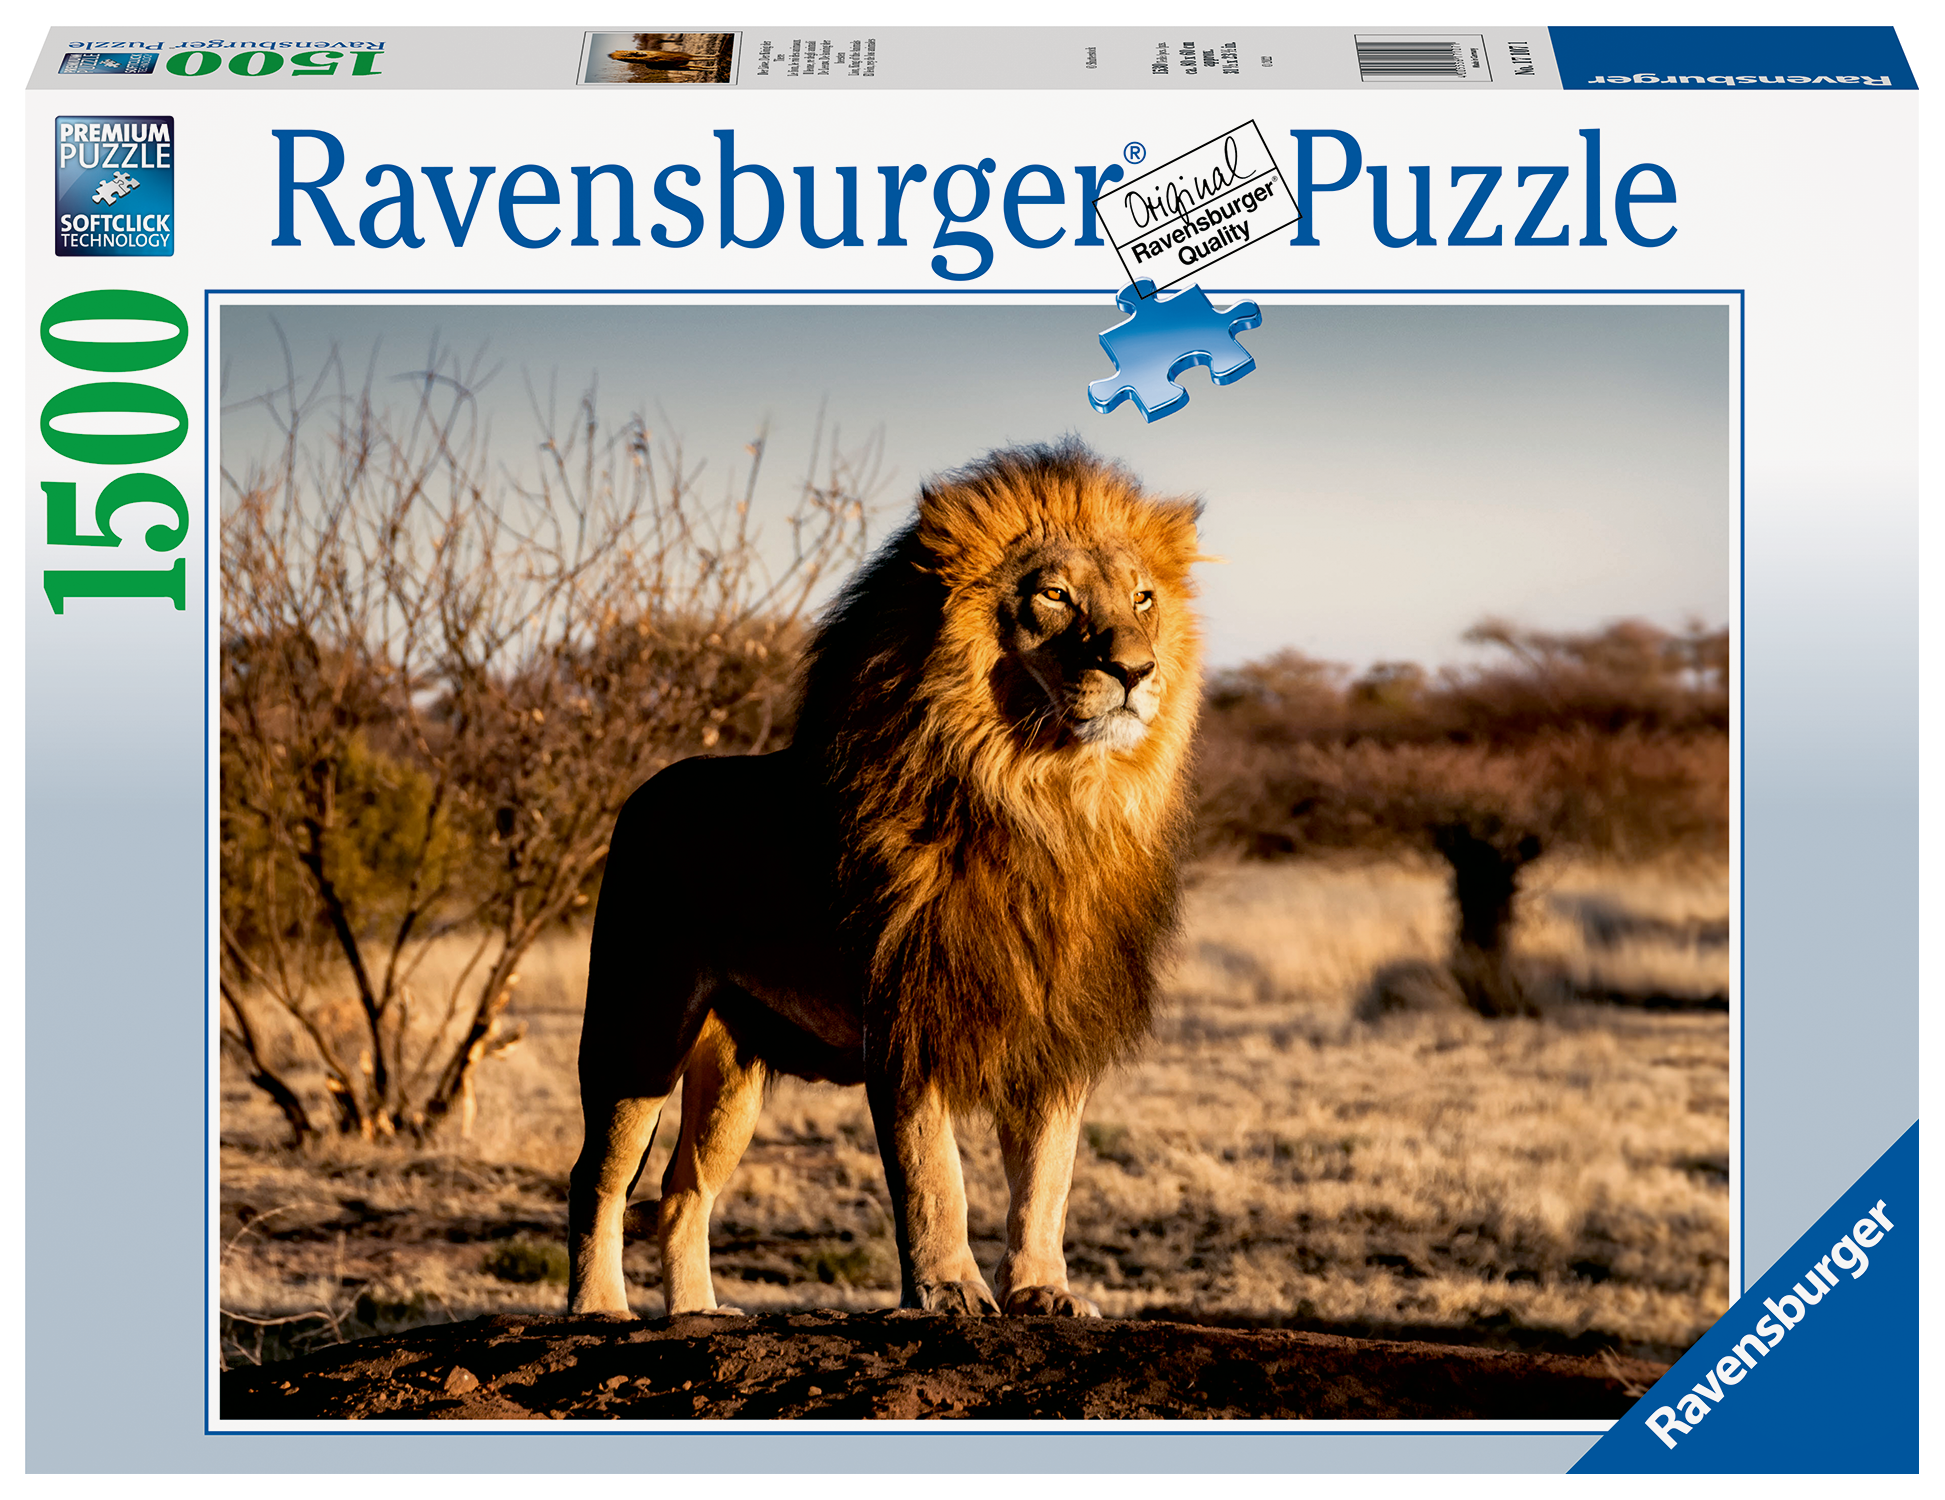 Ravensburger - puzzle il leone, re degli animali, 1500 pezzi, puzzle adulti - RAVENSBURGER